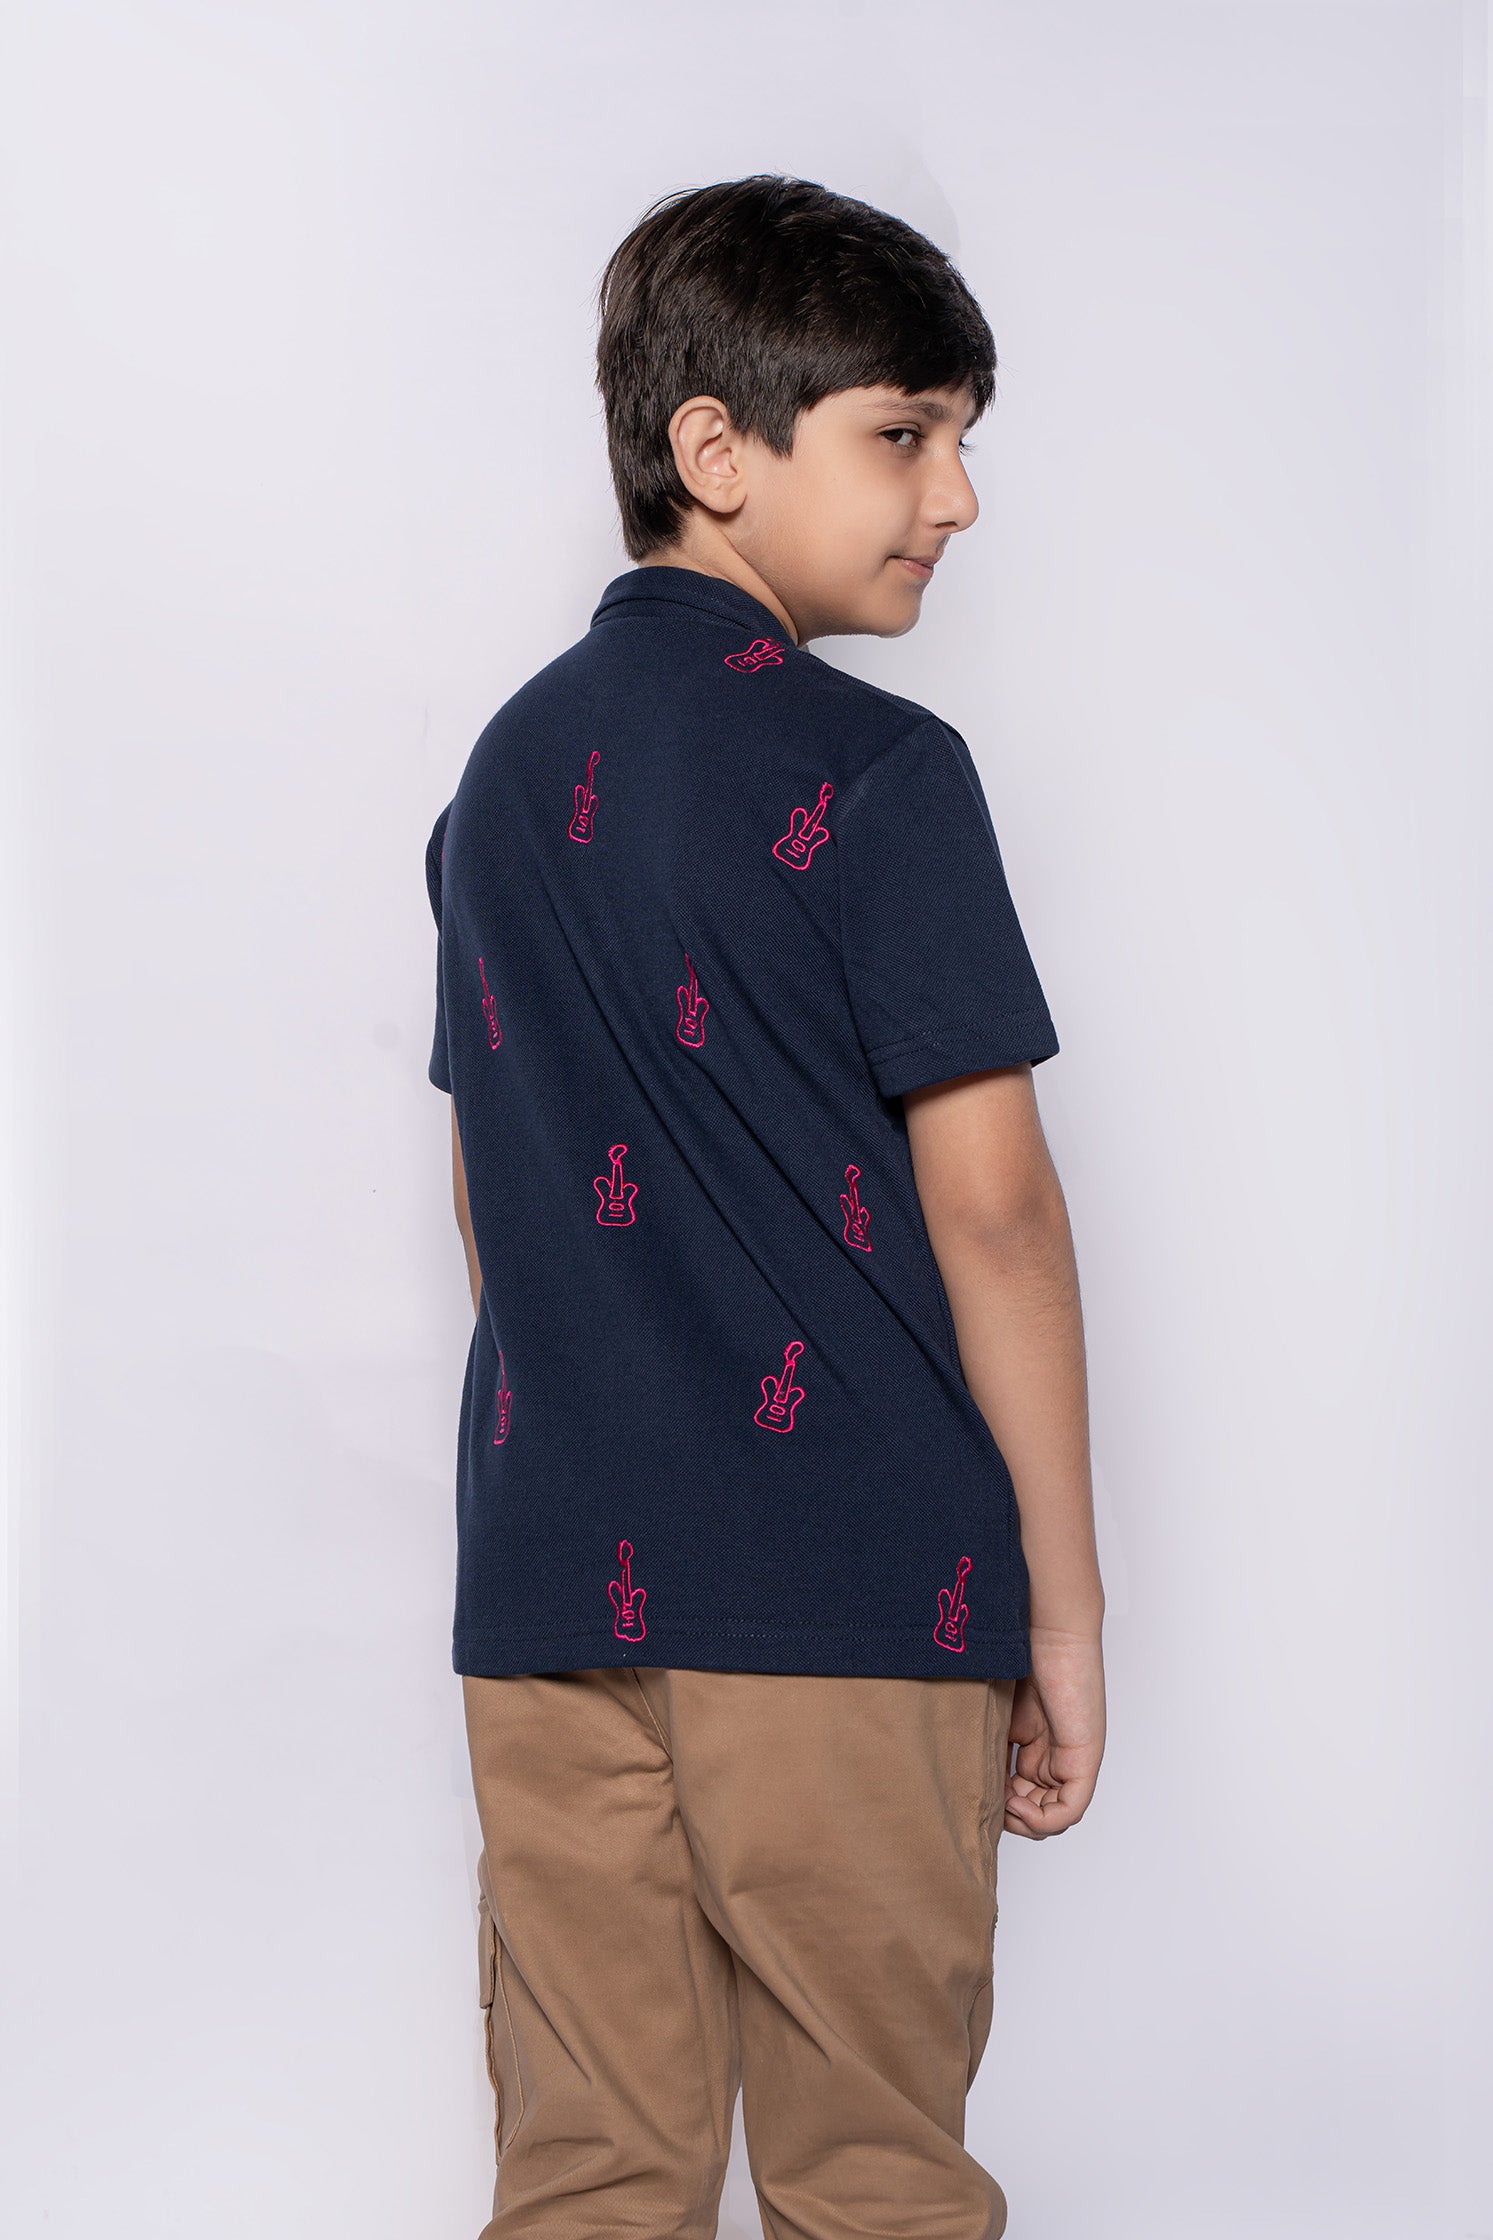 Boy’s embroidery polo shirt